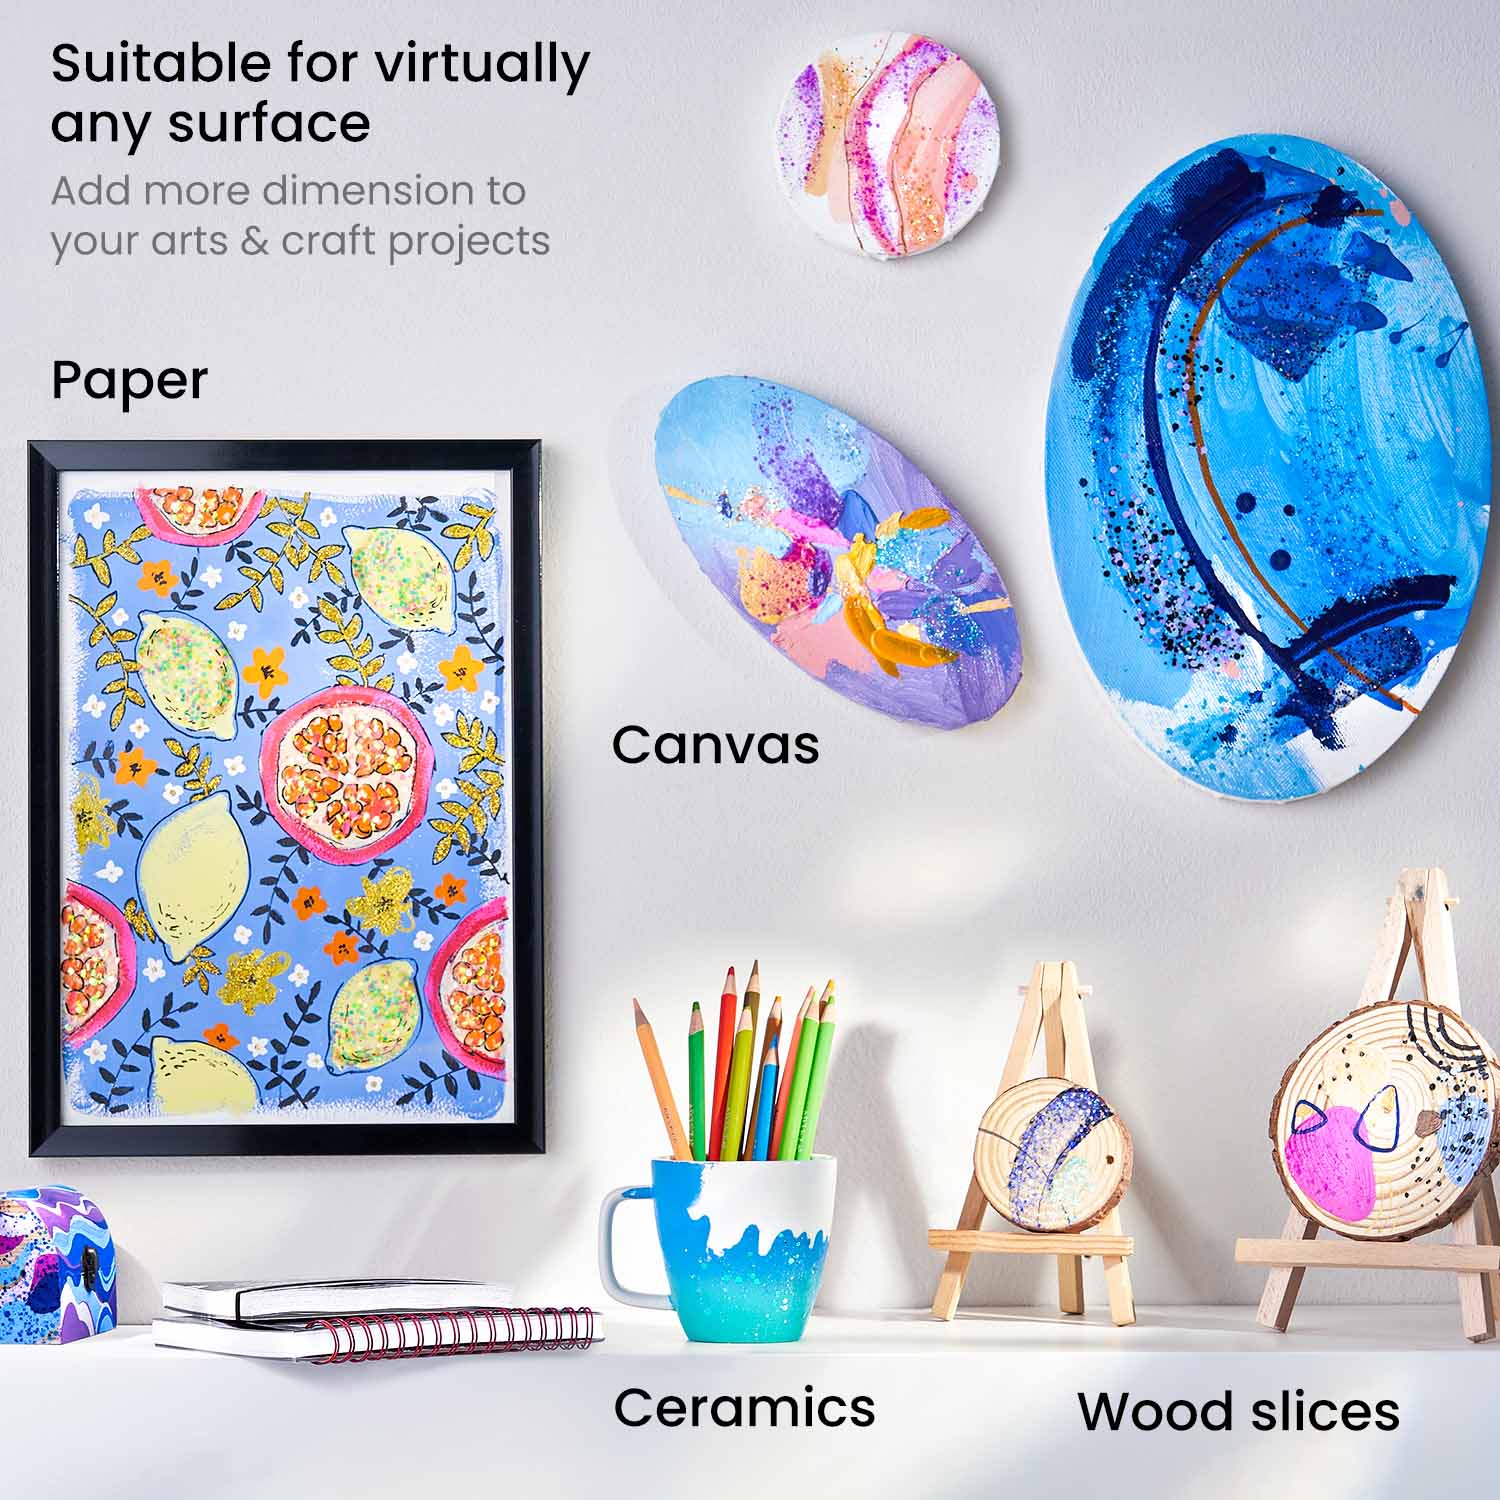 ARTEZA Iridescent Acrylic Paint, Set of 10 Dreamer Colors, 2 oz/60ml  Bottles, High Viscosity Shimmer, Water-Based, Blendable Paints, Art  Supplies for Canvas, Wood, Rocks, Fabrics